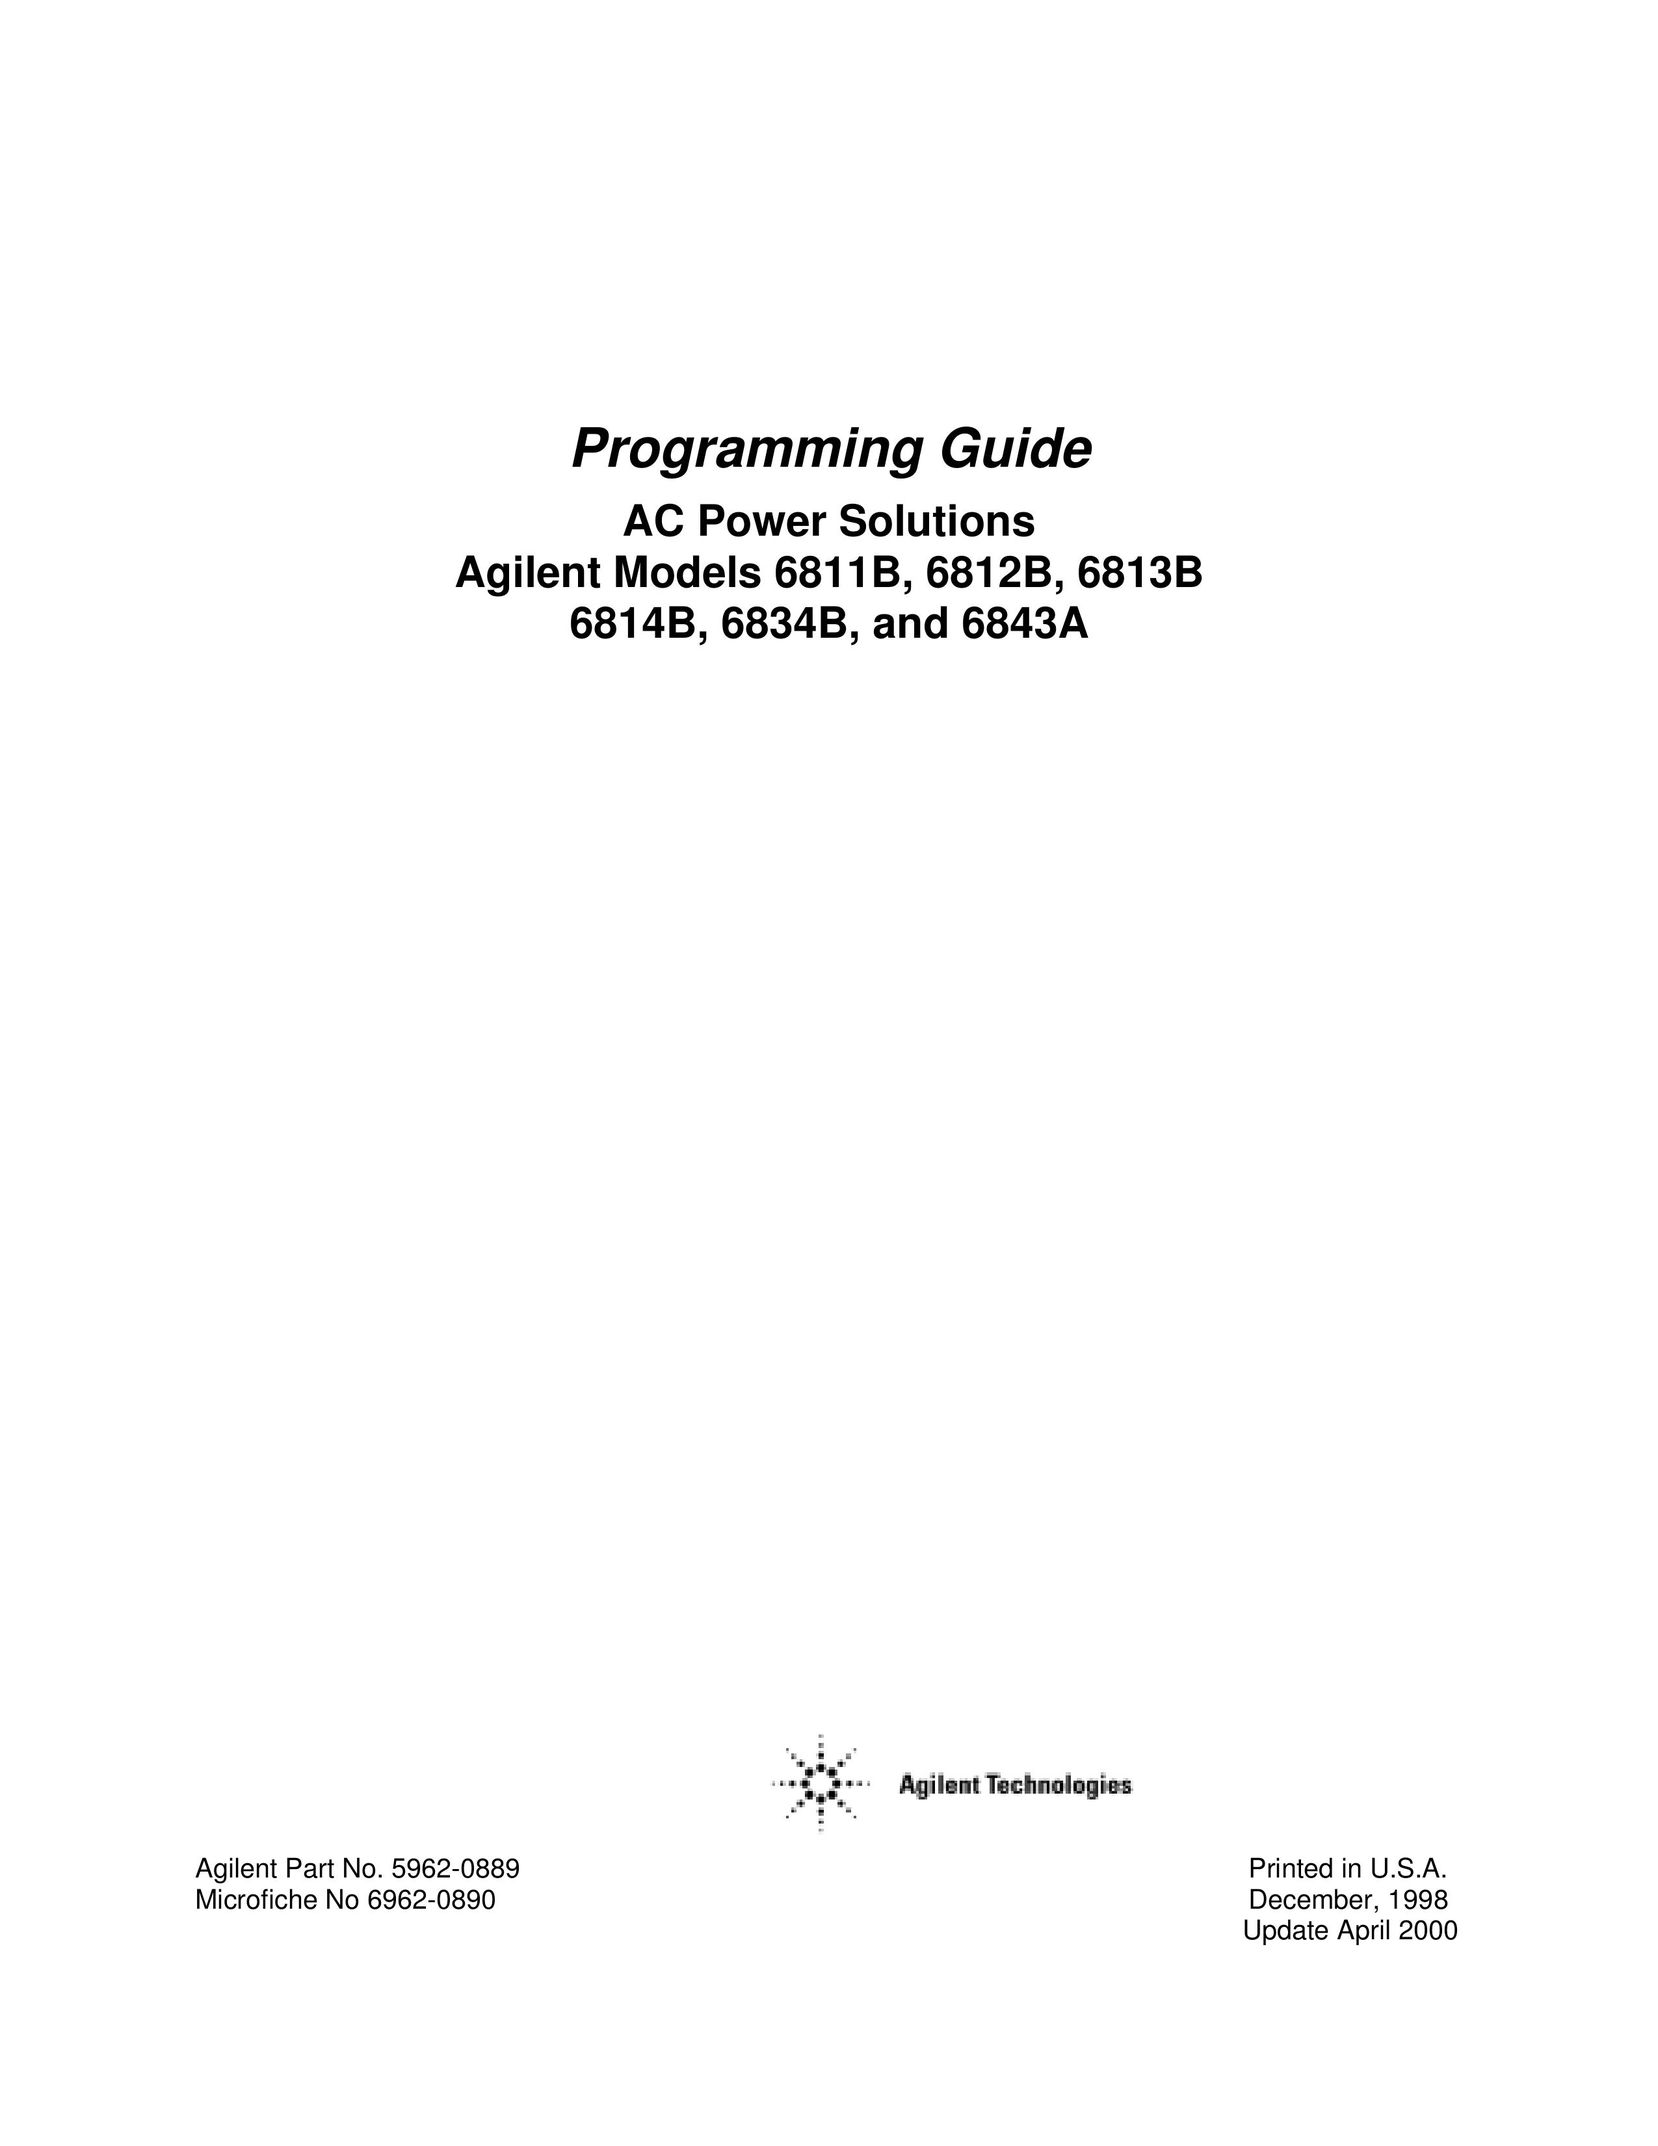 Agilent Technologies 6813B Welding System User Manual